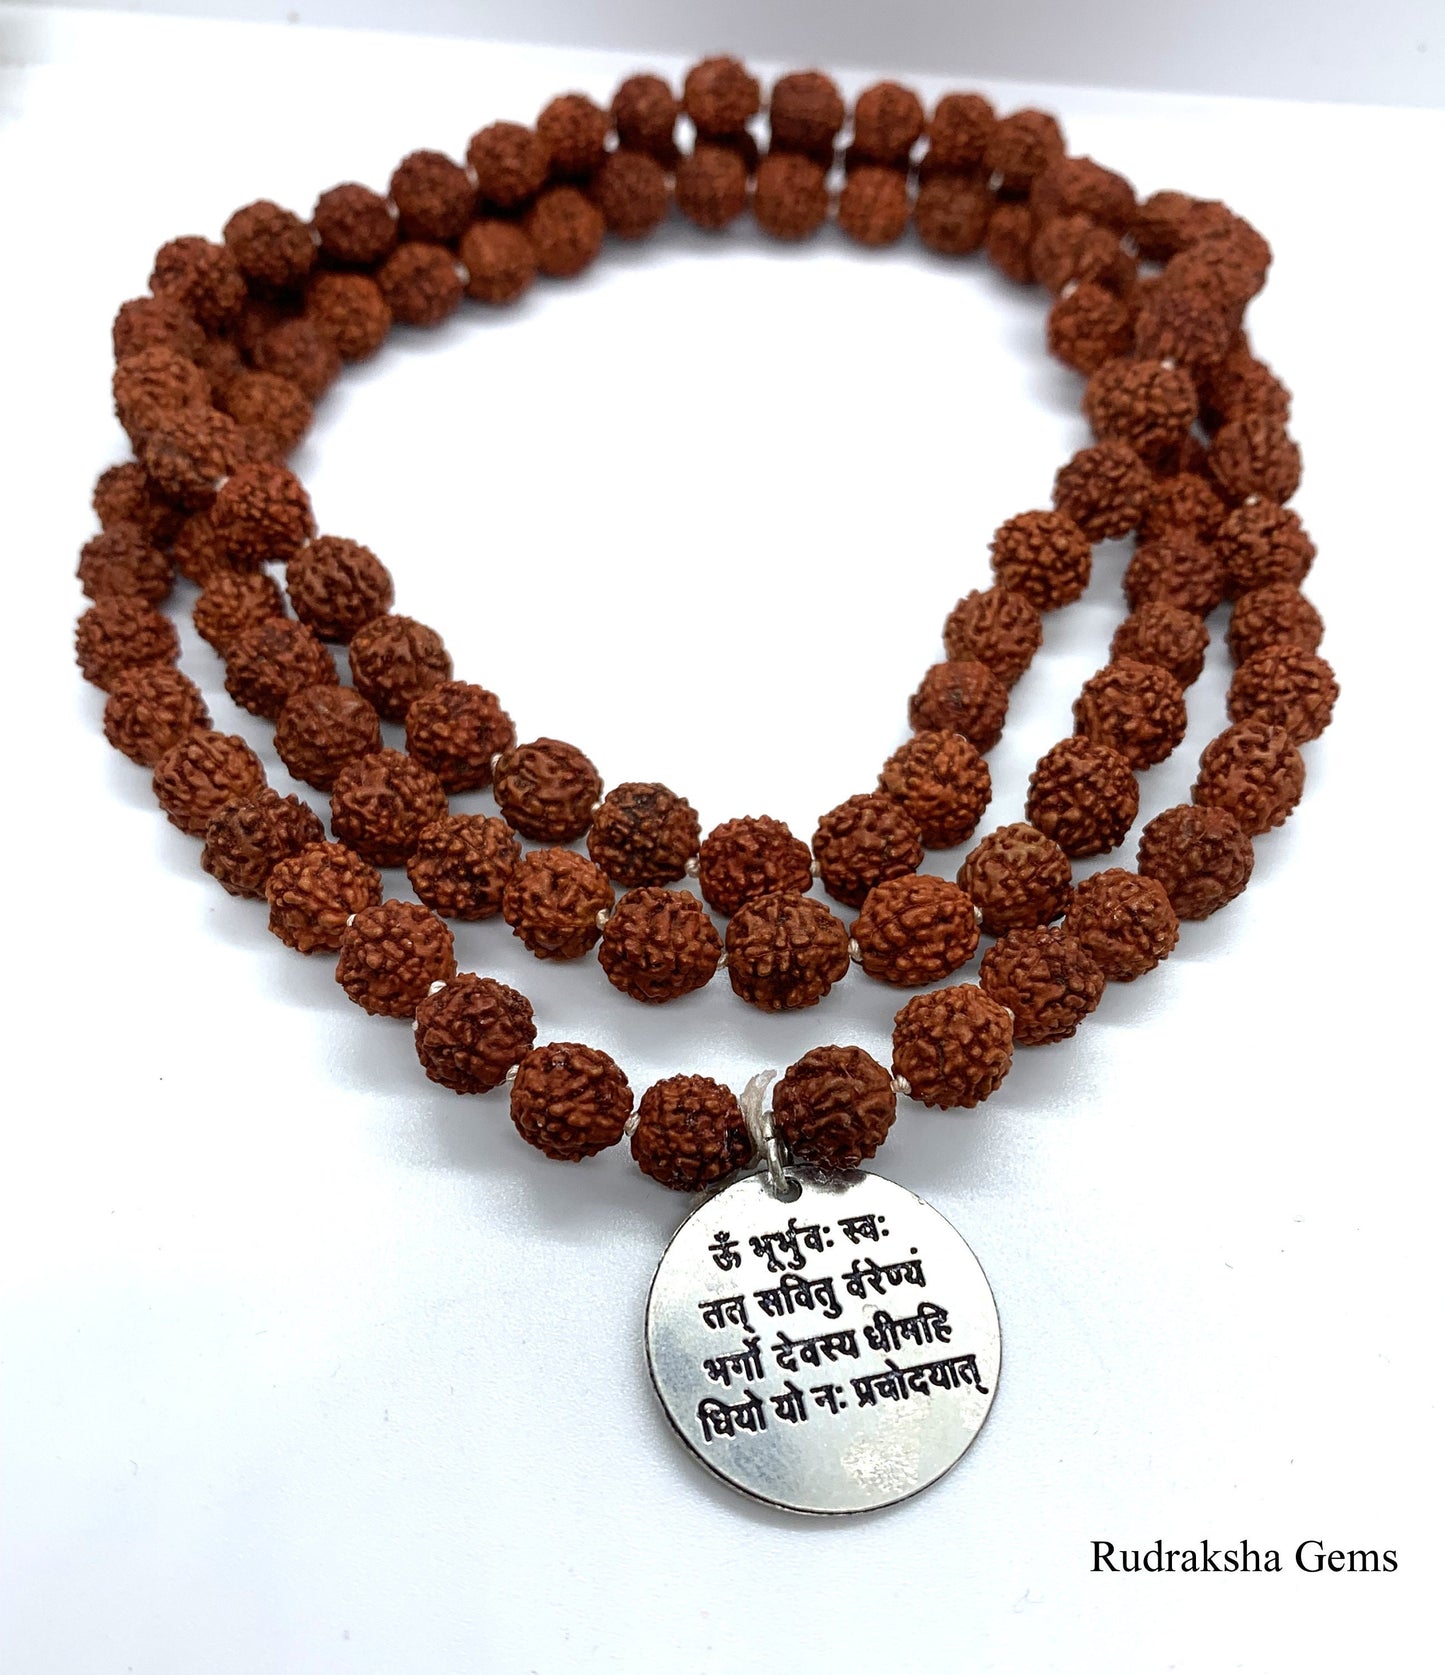 Om Gayatri Mantra Necklace,108 beads,8mm Natural Rudraksha Seed Beads, Buddhist Necklace, Rudraksha Necklace, Unisex,Prayer,Mala,Meditation